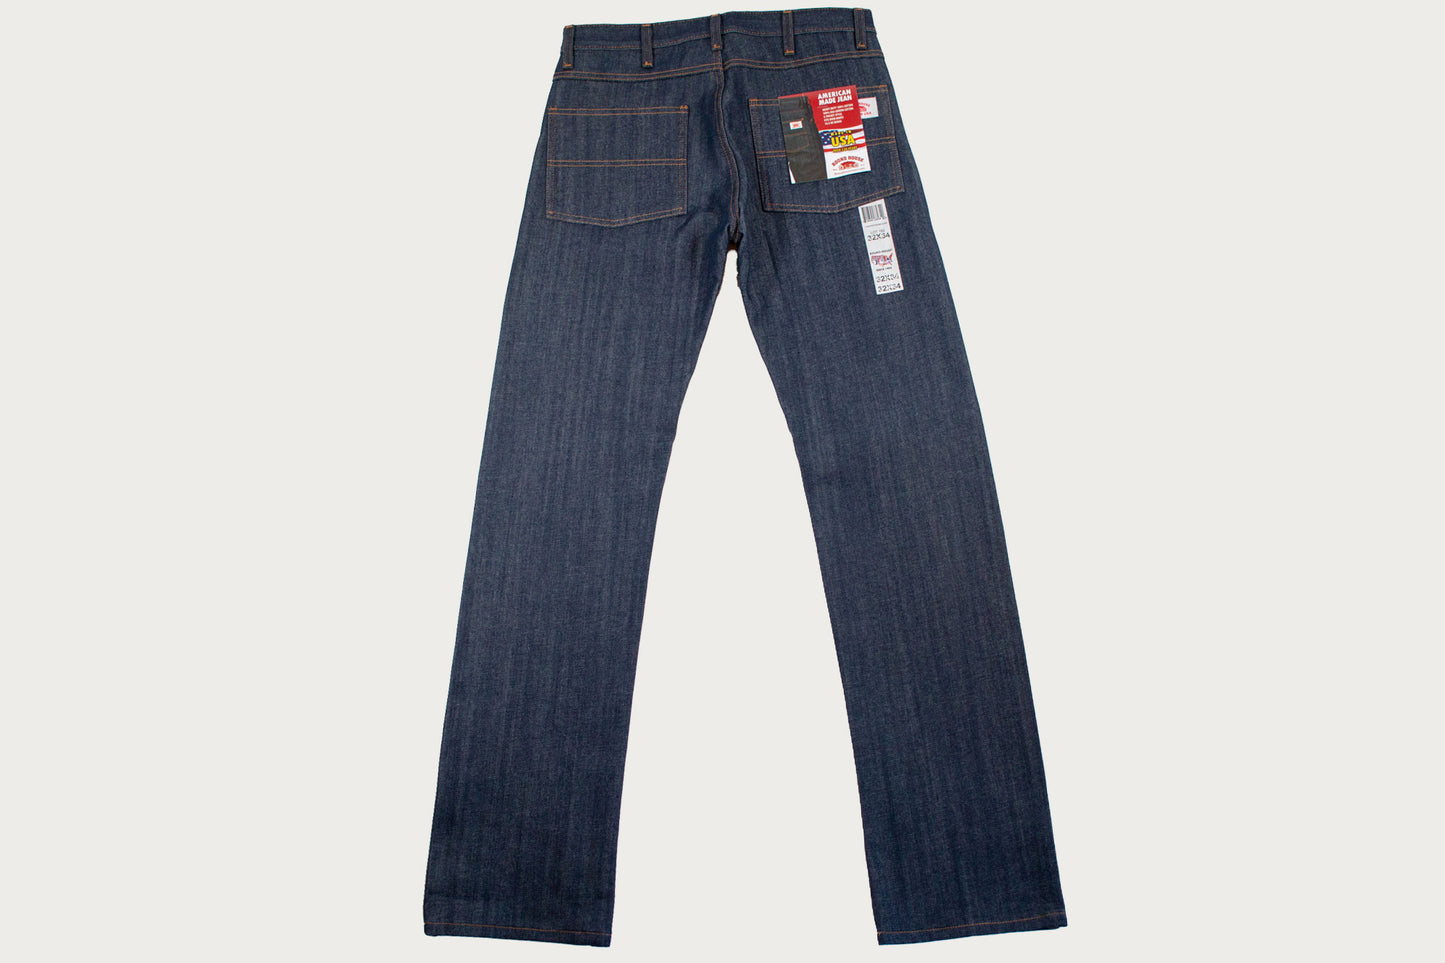 Round House Lot 182 Slim Straight Fit Raw Denim Jeans - Indigo